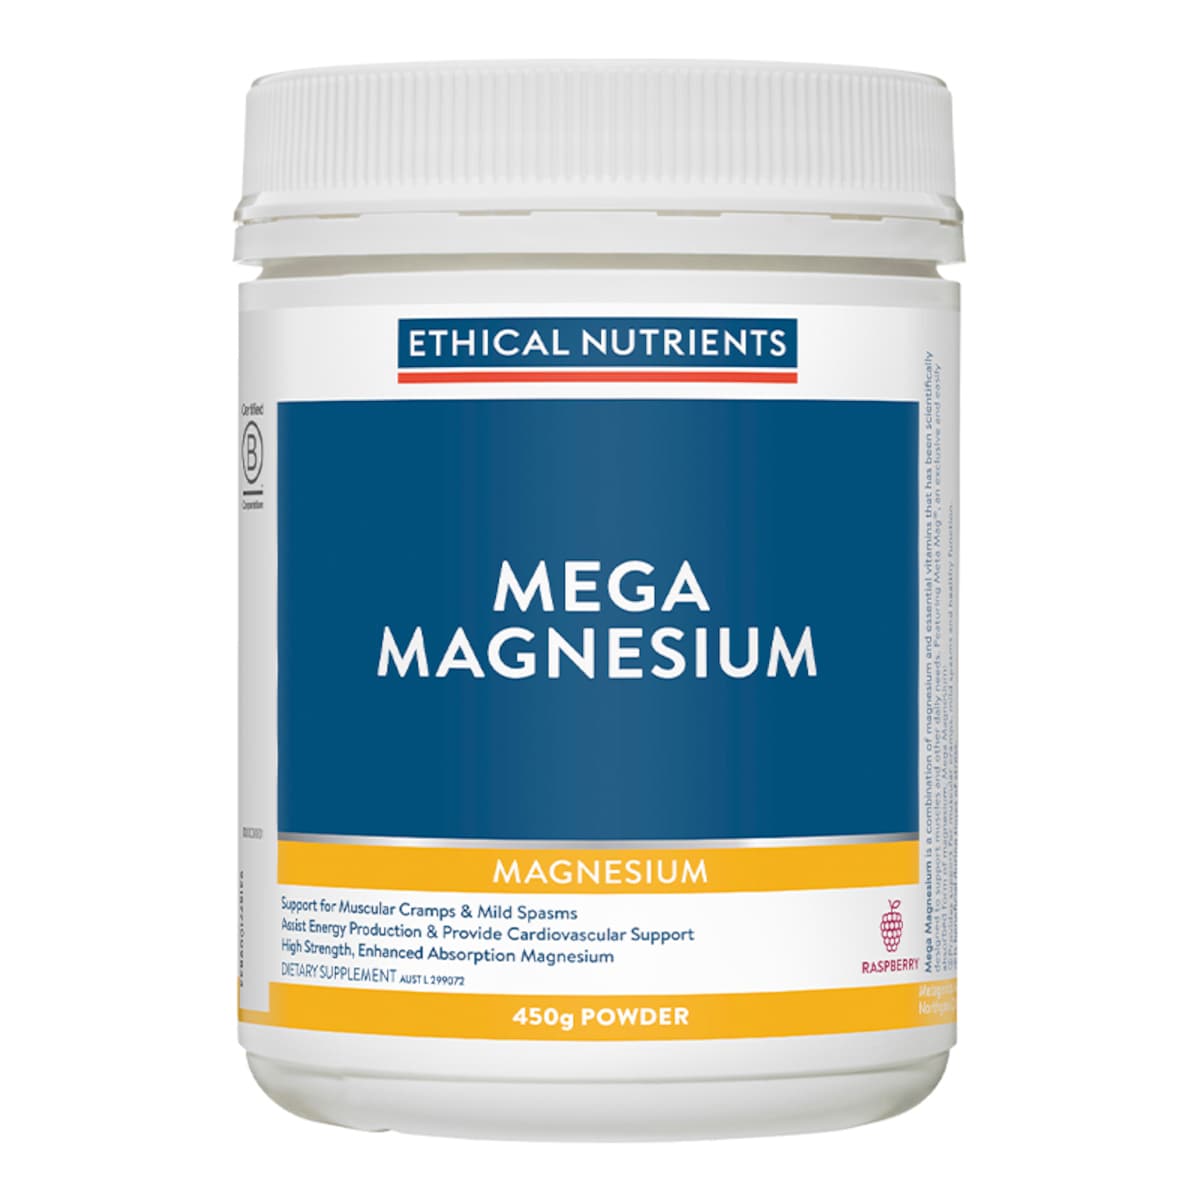 Ethical Nutrients Mega Magnesium Raspberry 450g Powder Australia